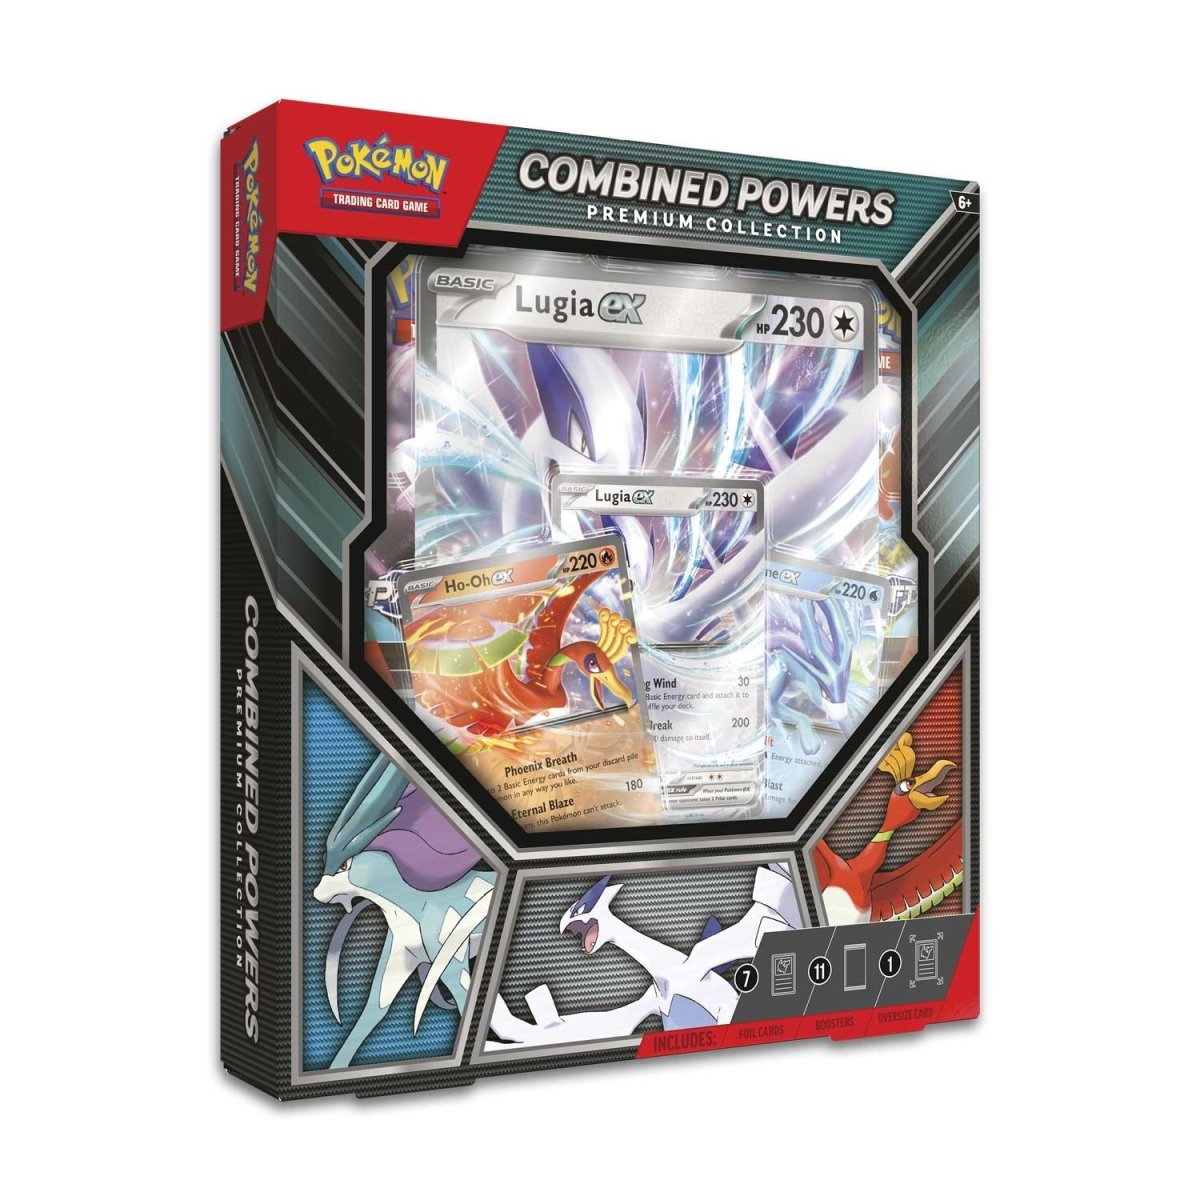 Pokemon Combined Powers Premium Collection